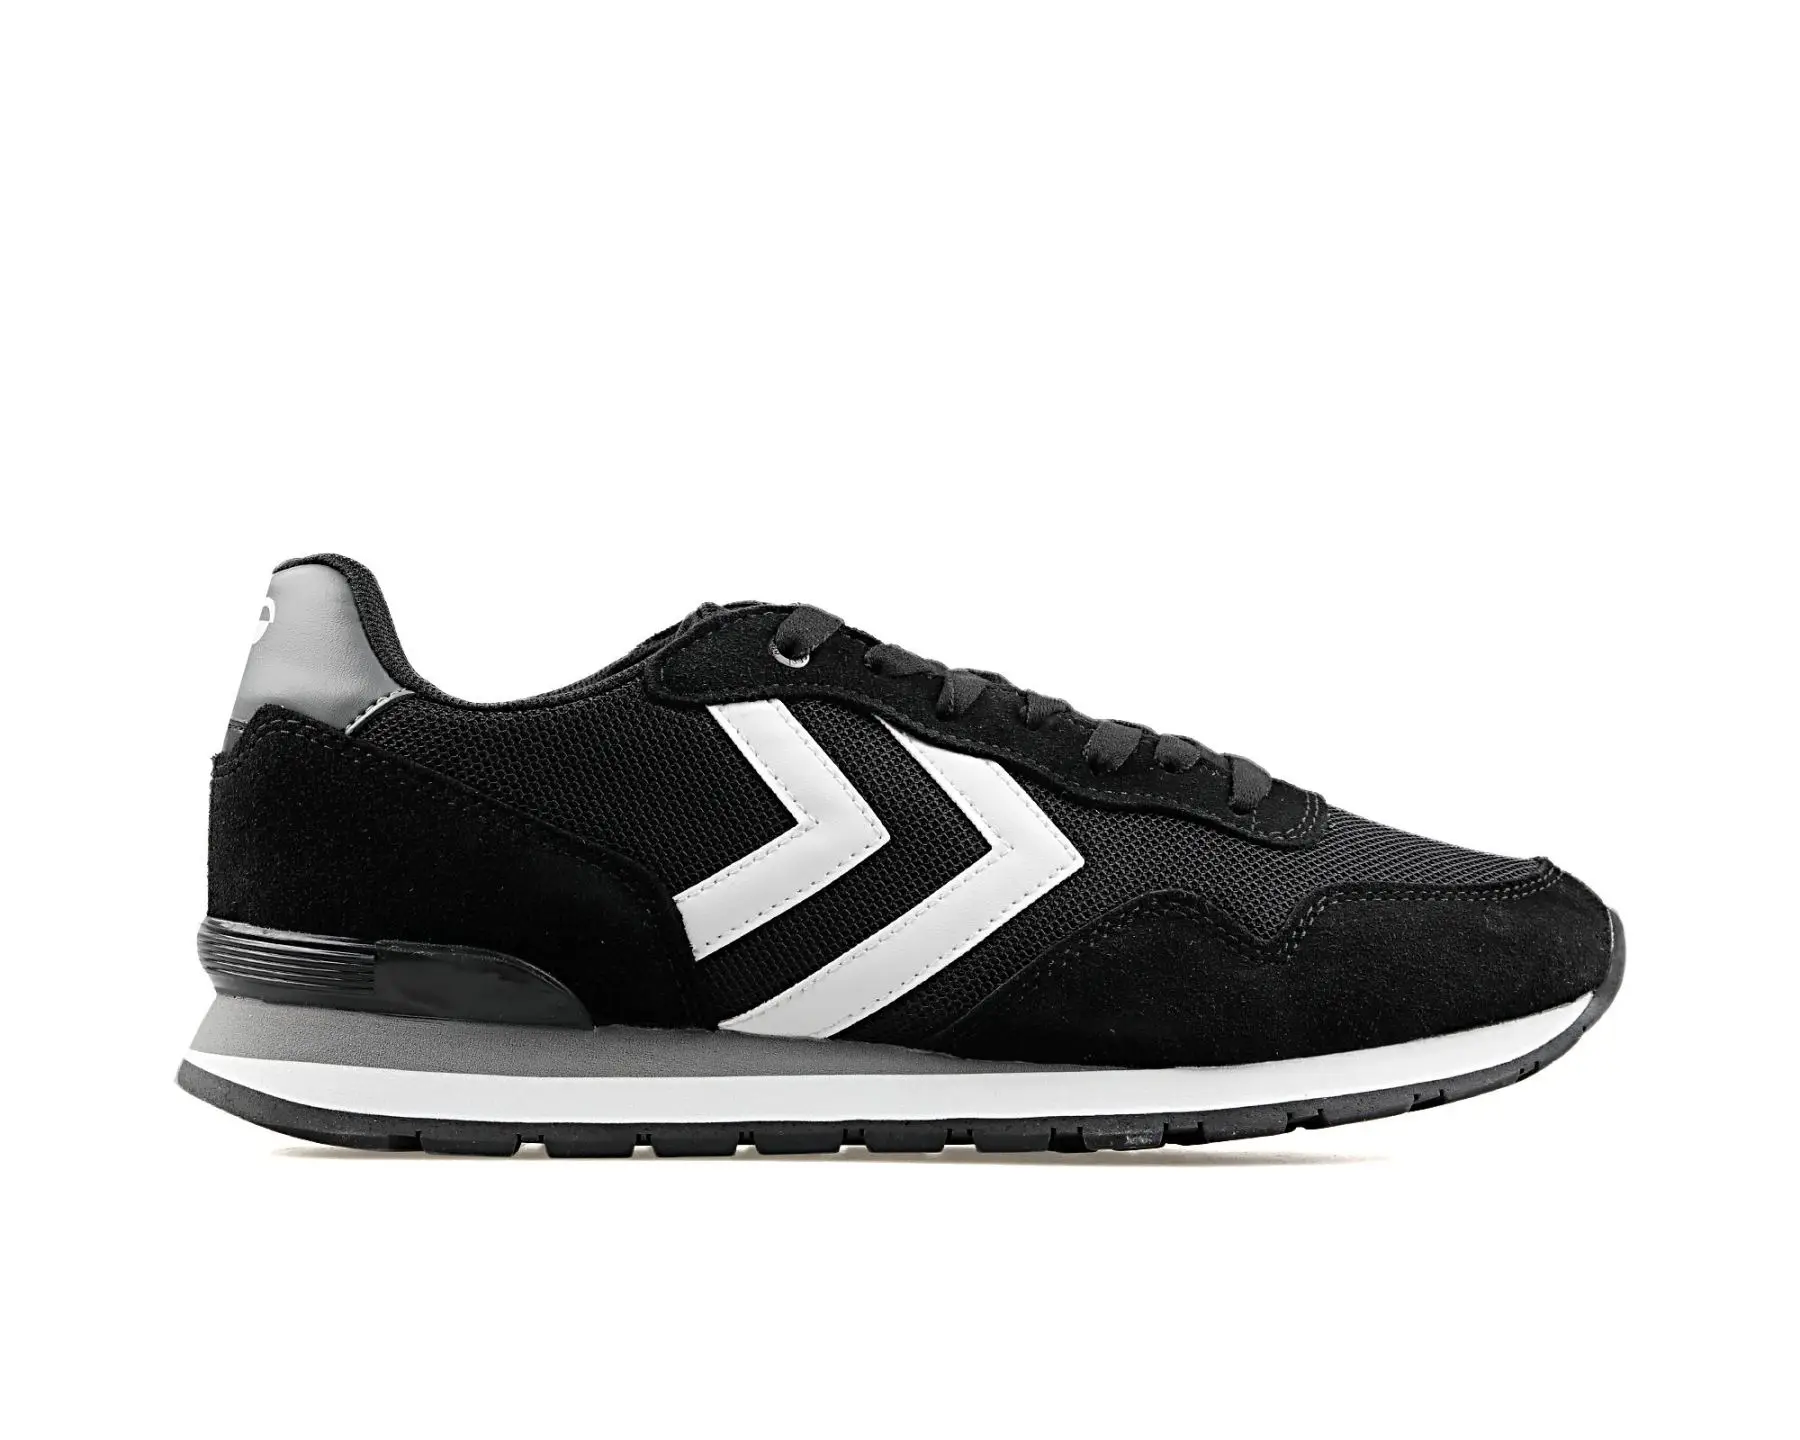 Hummel Original Unisex Sneakers Casual Sneakers Black Color Casual Walking Shoes Casual Men's and Women's Sneakers